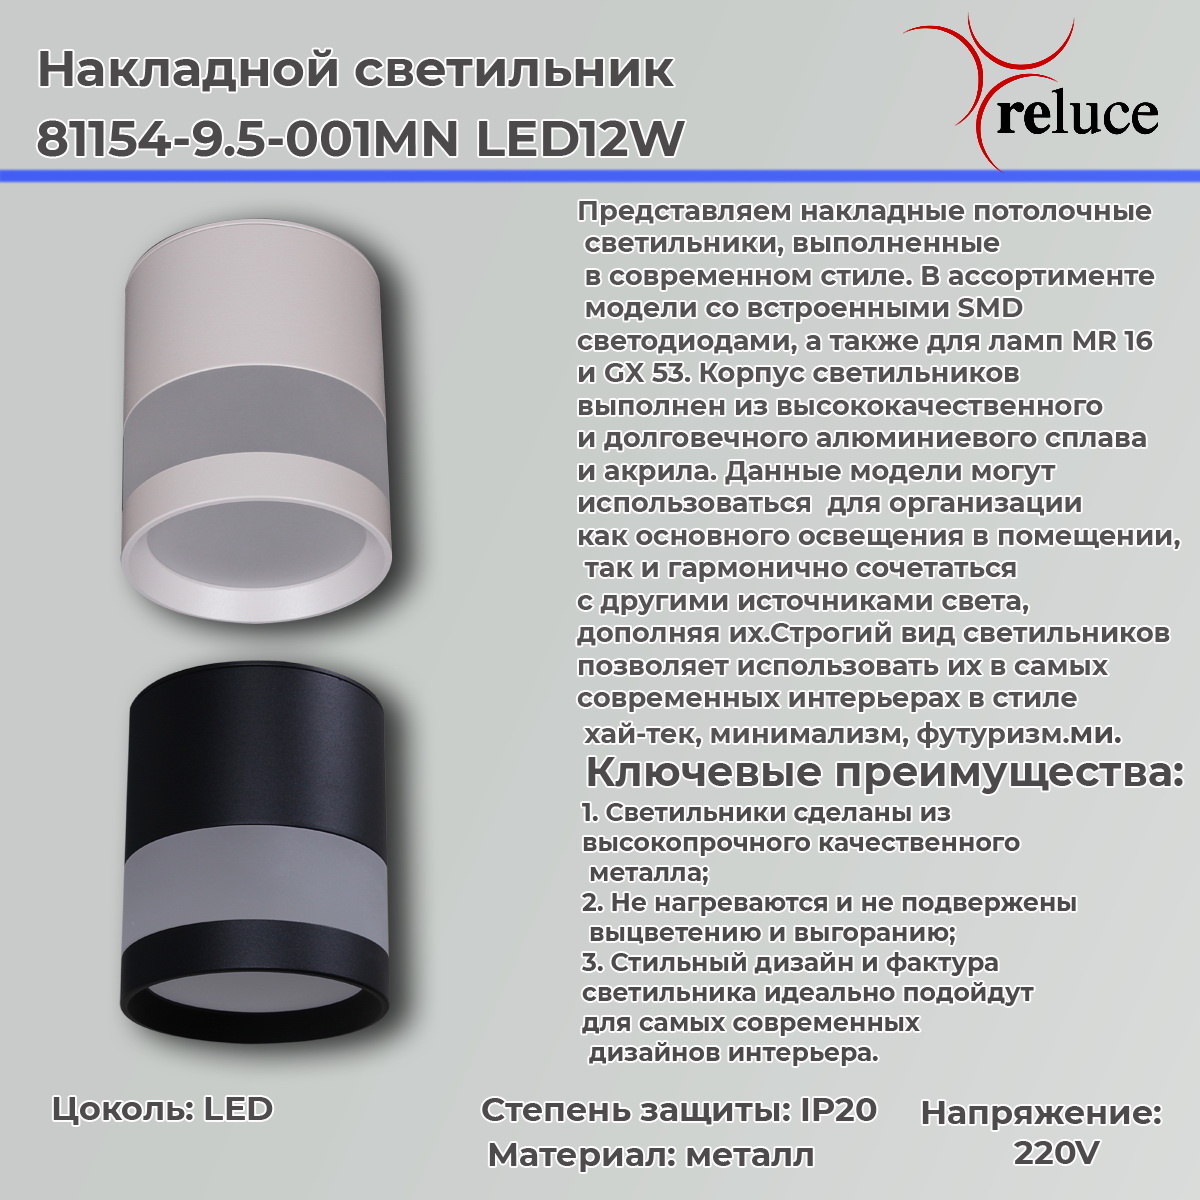 Накладной светильник Reluce 81154-9.5-001MN LED12W BK